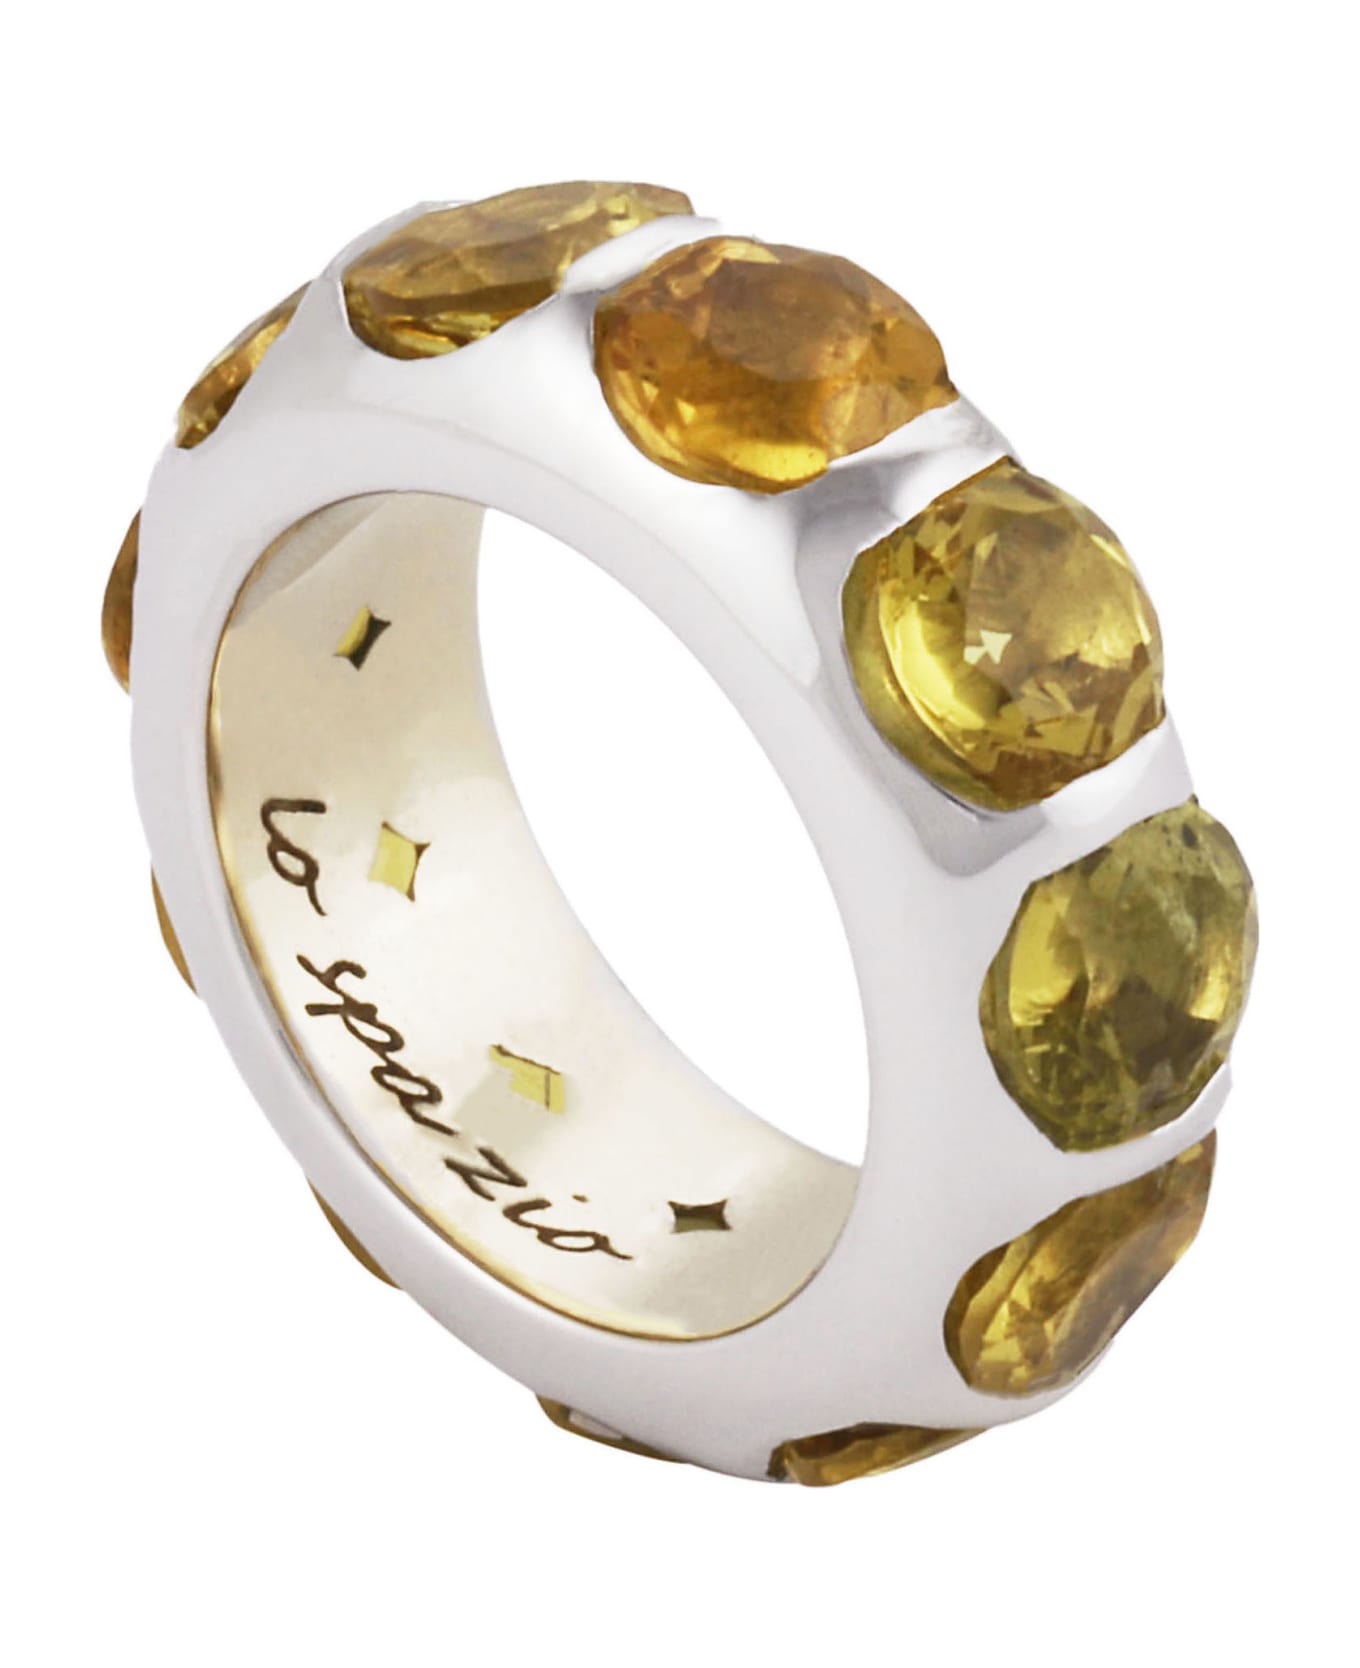 Lo Spazio Jewelry Lo Spazio Yellow Beryl Ring - Yellow